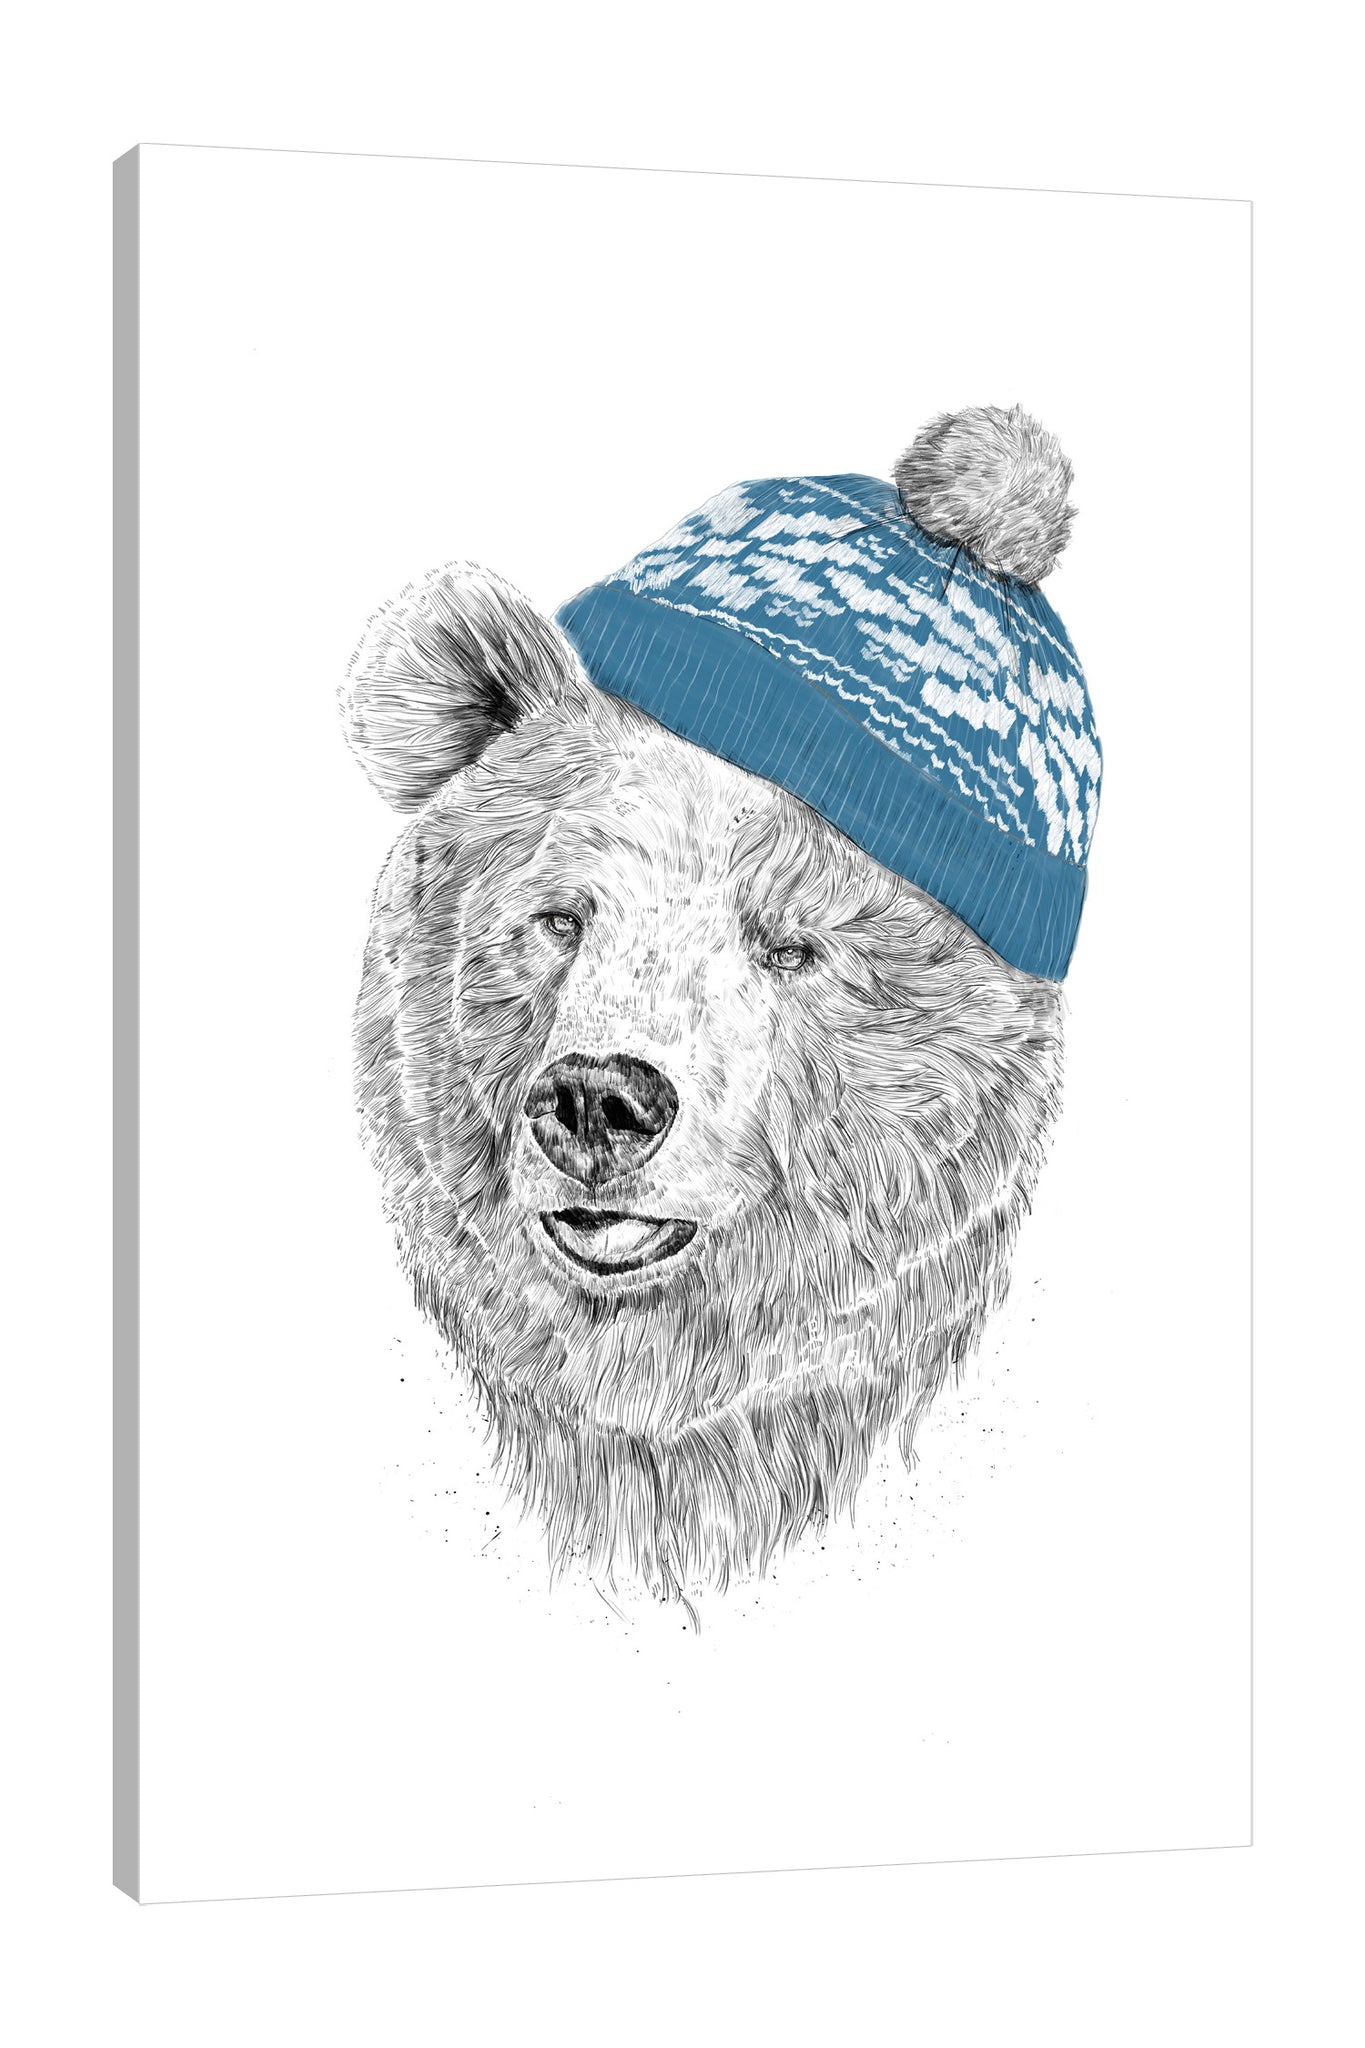 Balazs-Solti,Modern & Contemporary,Animals,animals,animal,bears,bear,hat,hats,winter,stroke,blue,White,Gray